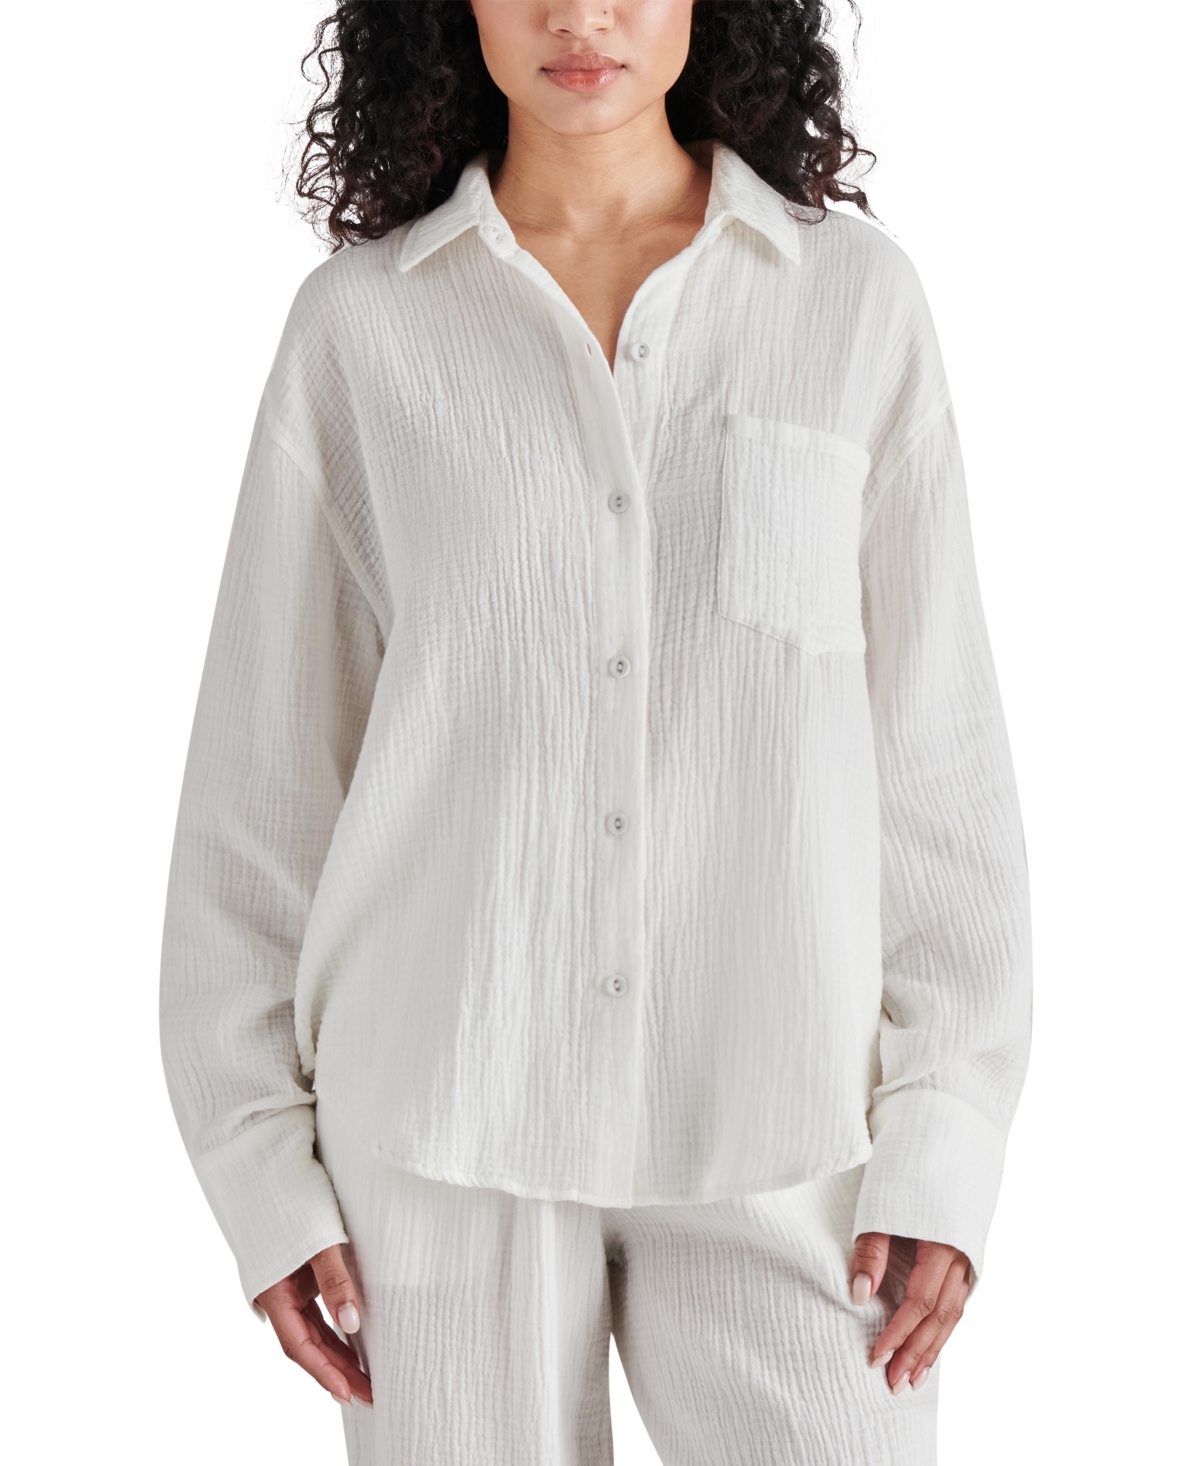 Women's Juna Textured Button-Down Dropped-Shoulder Cotton Top - White